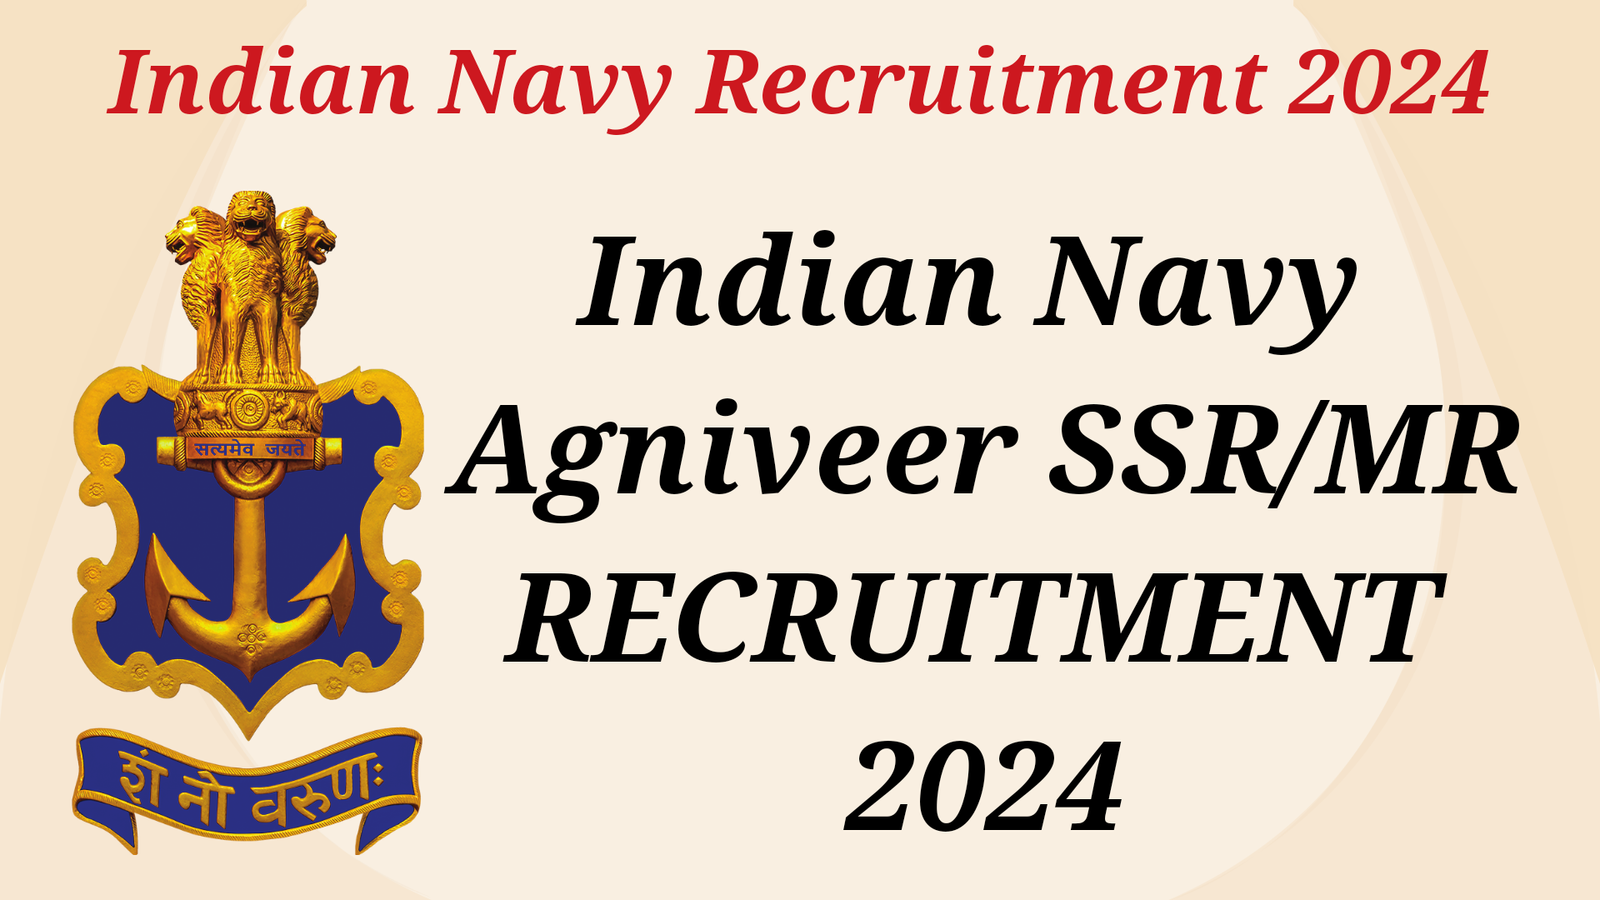 Indian Navy Agniveer SSR/MR Recruitment 